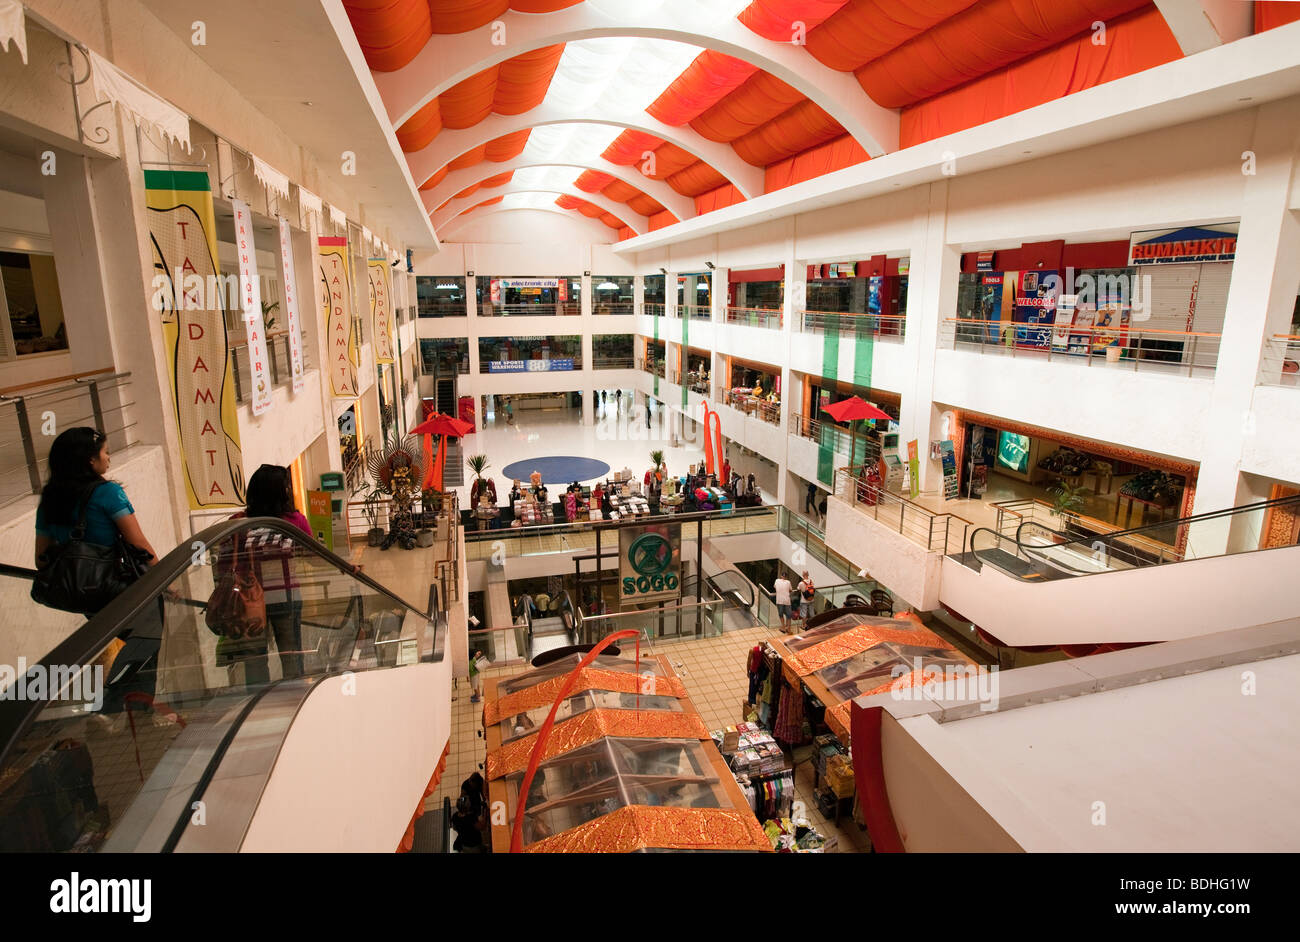 Indonesia, Bali, Kuta, Jalan Kartika Plaza, Discovery Centre Shopping Mall Stock Photo